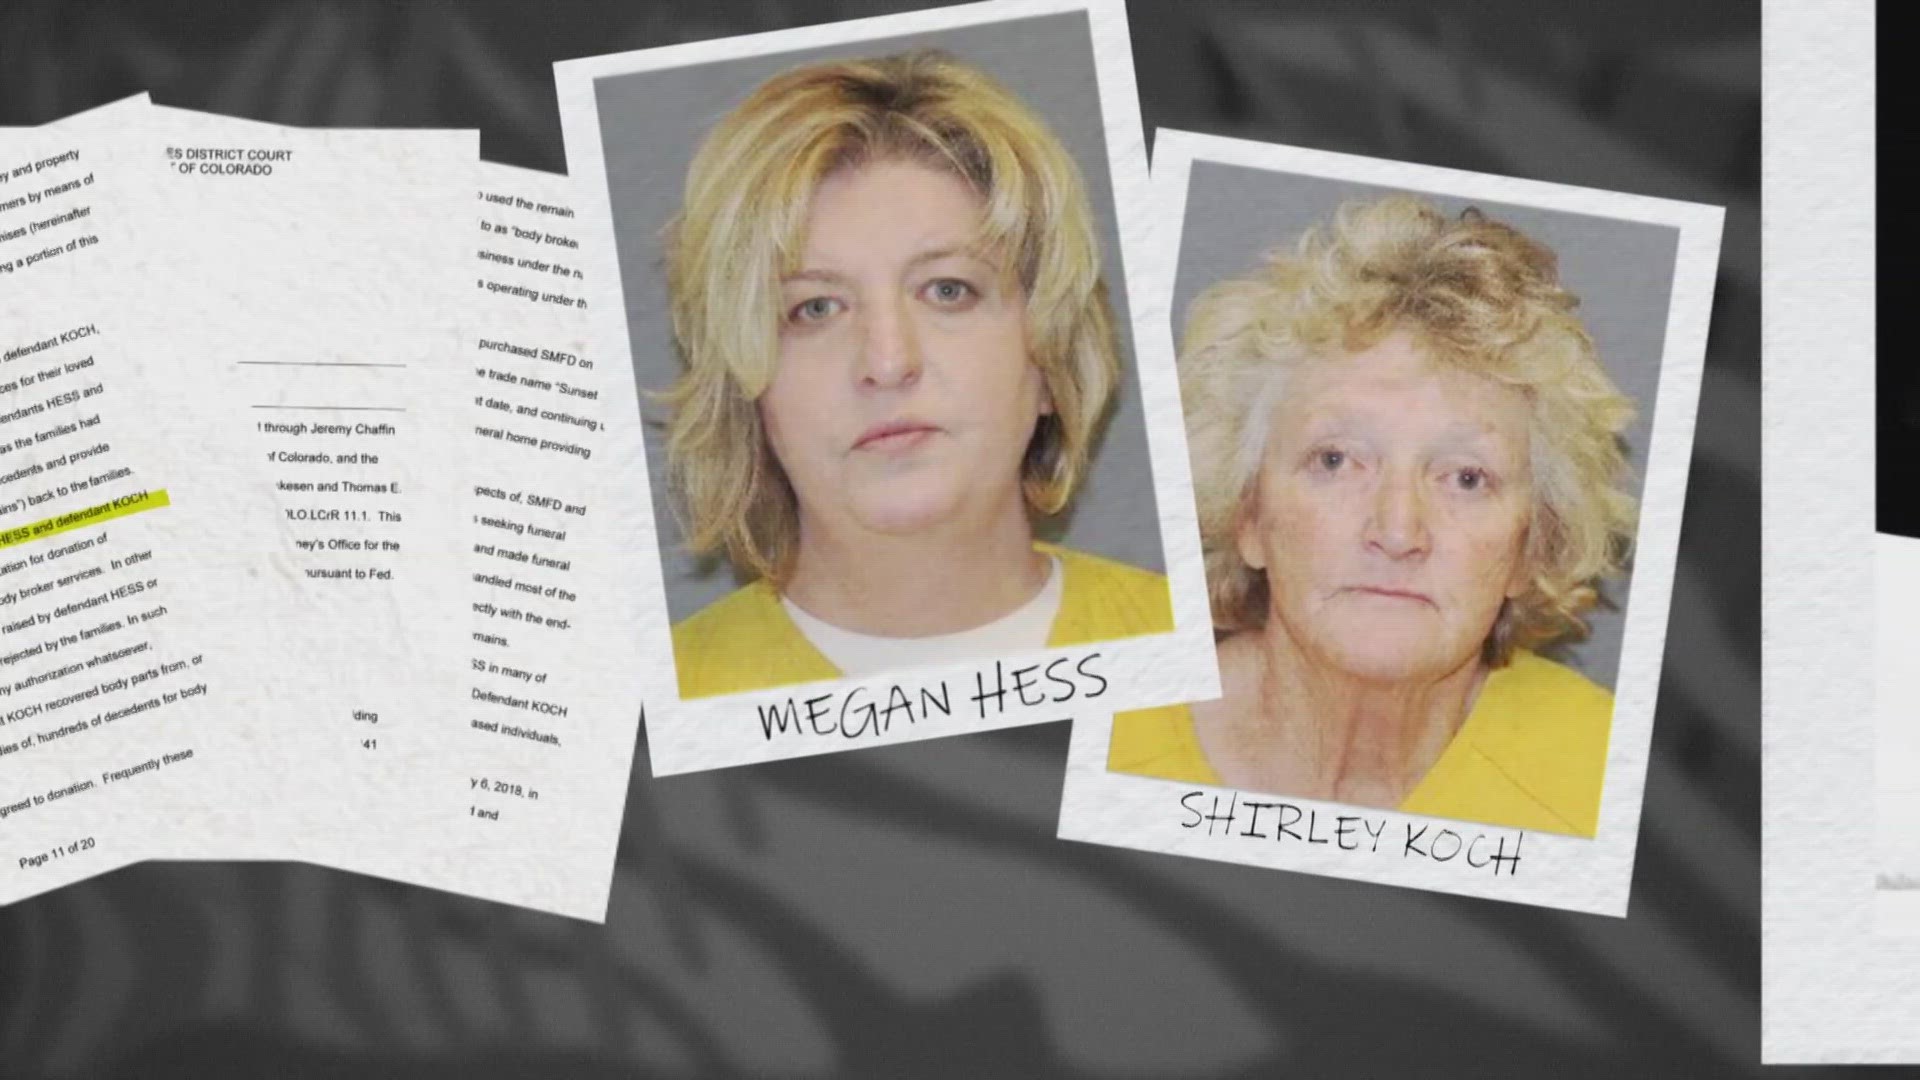 Megan Hess was sentenced to 20 years in prison last year.